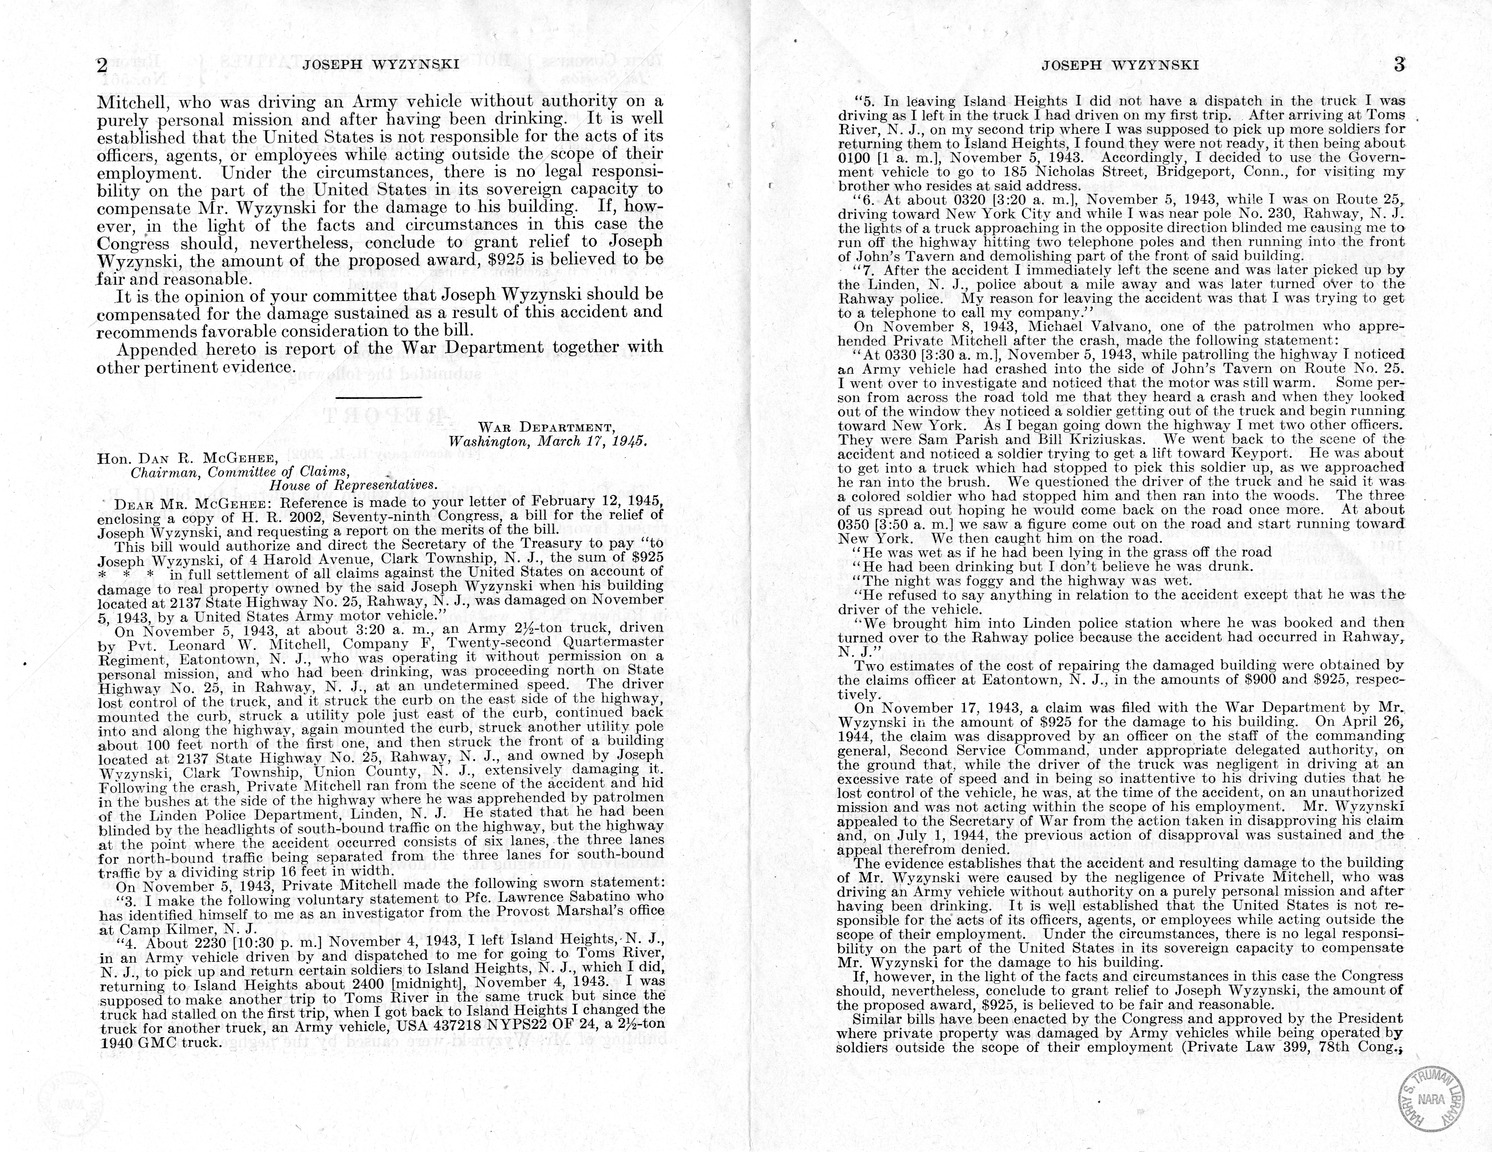 Memorandum from Frederick J. Bailey to M. C. Latta, H.R. 2002, For the Relief of Joseph Wyzynski, with Attachments